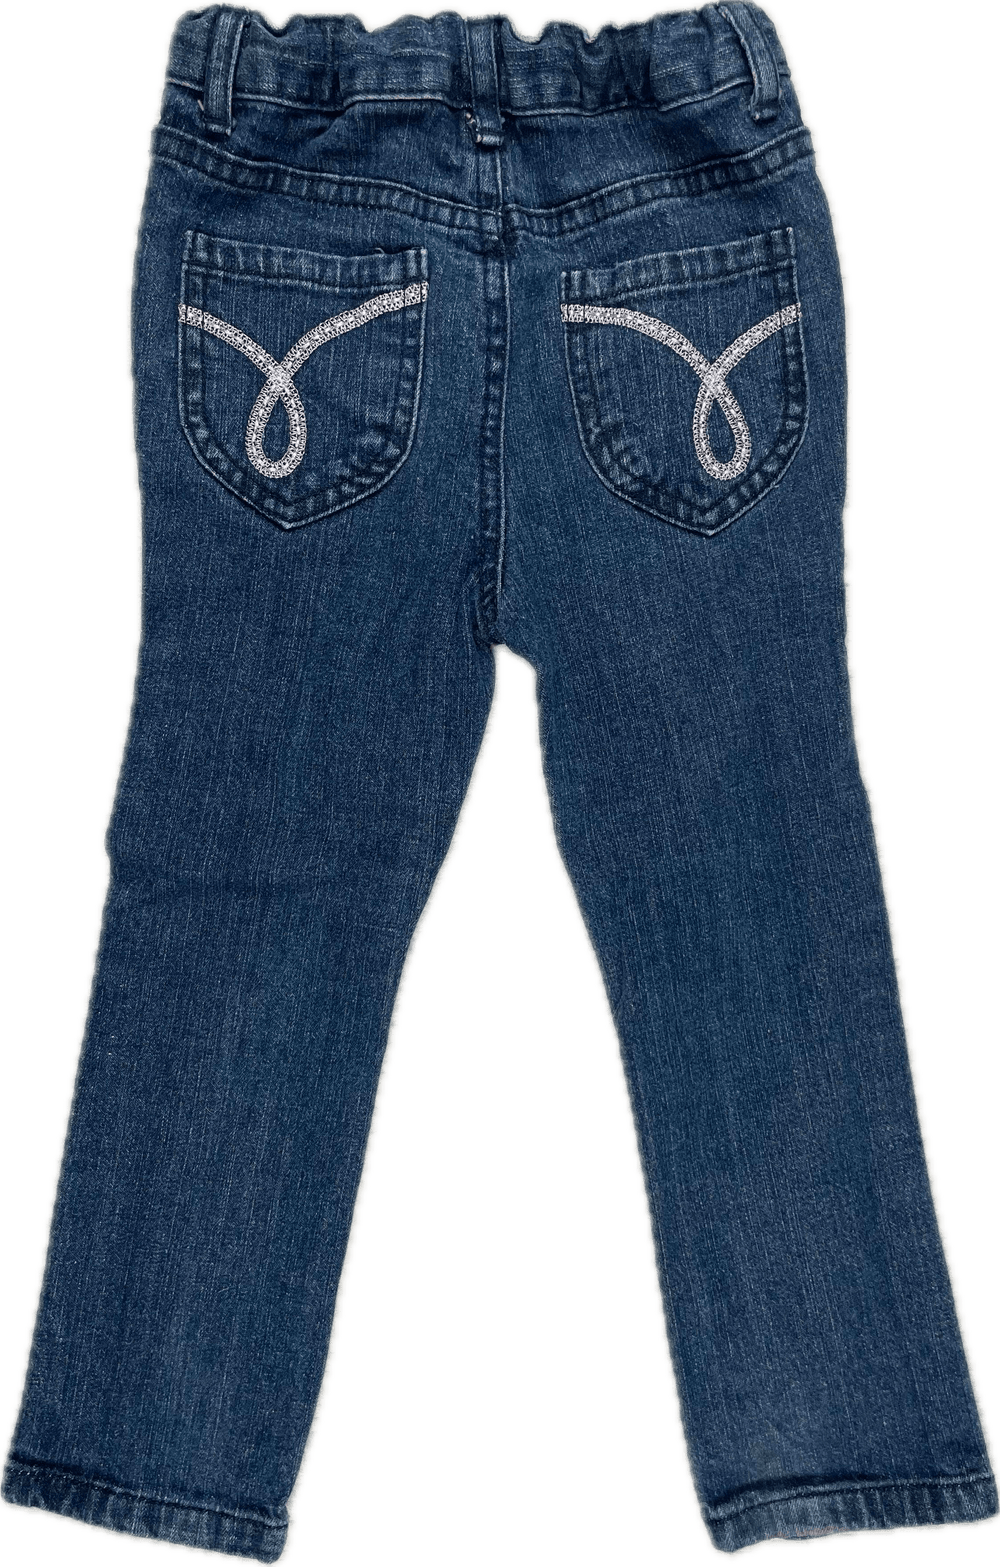 Calvin Klein Kids Stretch Slim Fit Jeans - Size 2 Years - Jean Pool